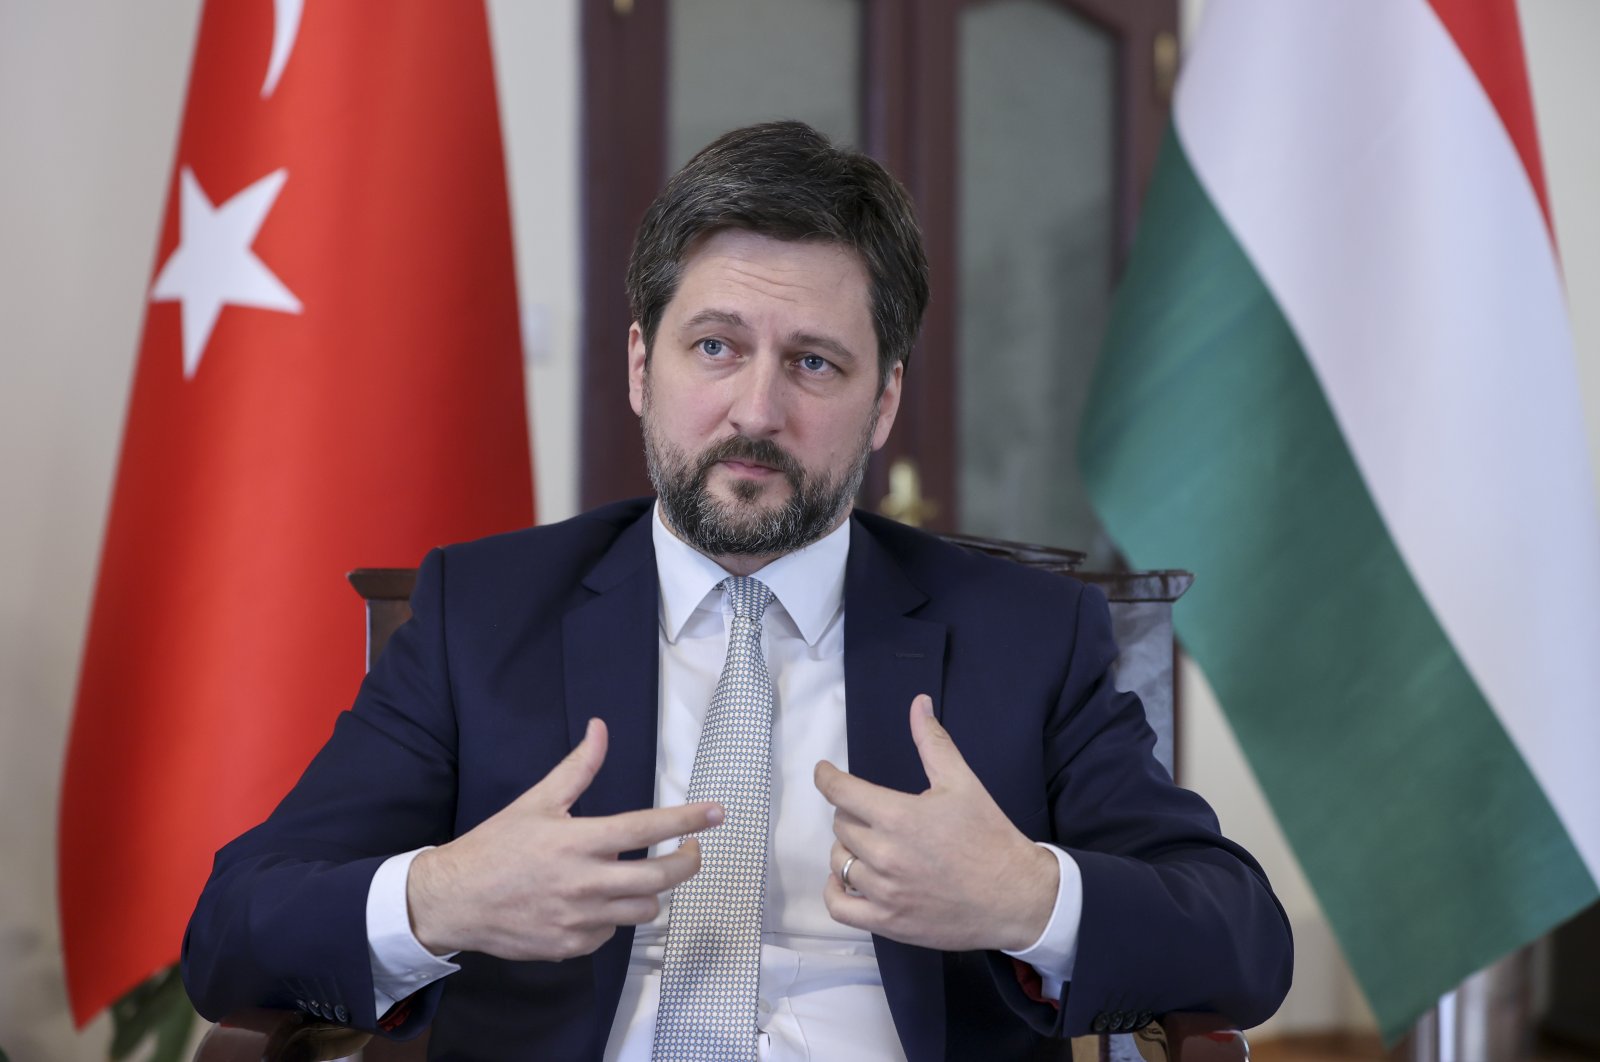 Hungarian Envoy to Ankara Viktor Matis speaks in an interview with Anadolu Agency (AA), in Ankara, Turkey, April 1, 2021. (AA)